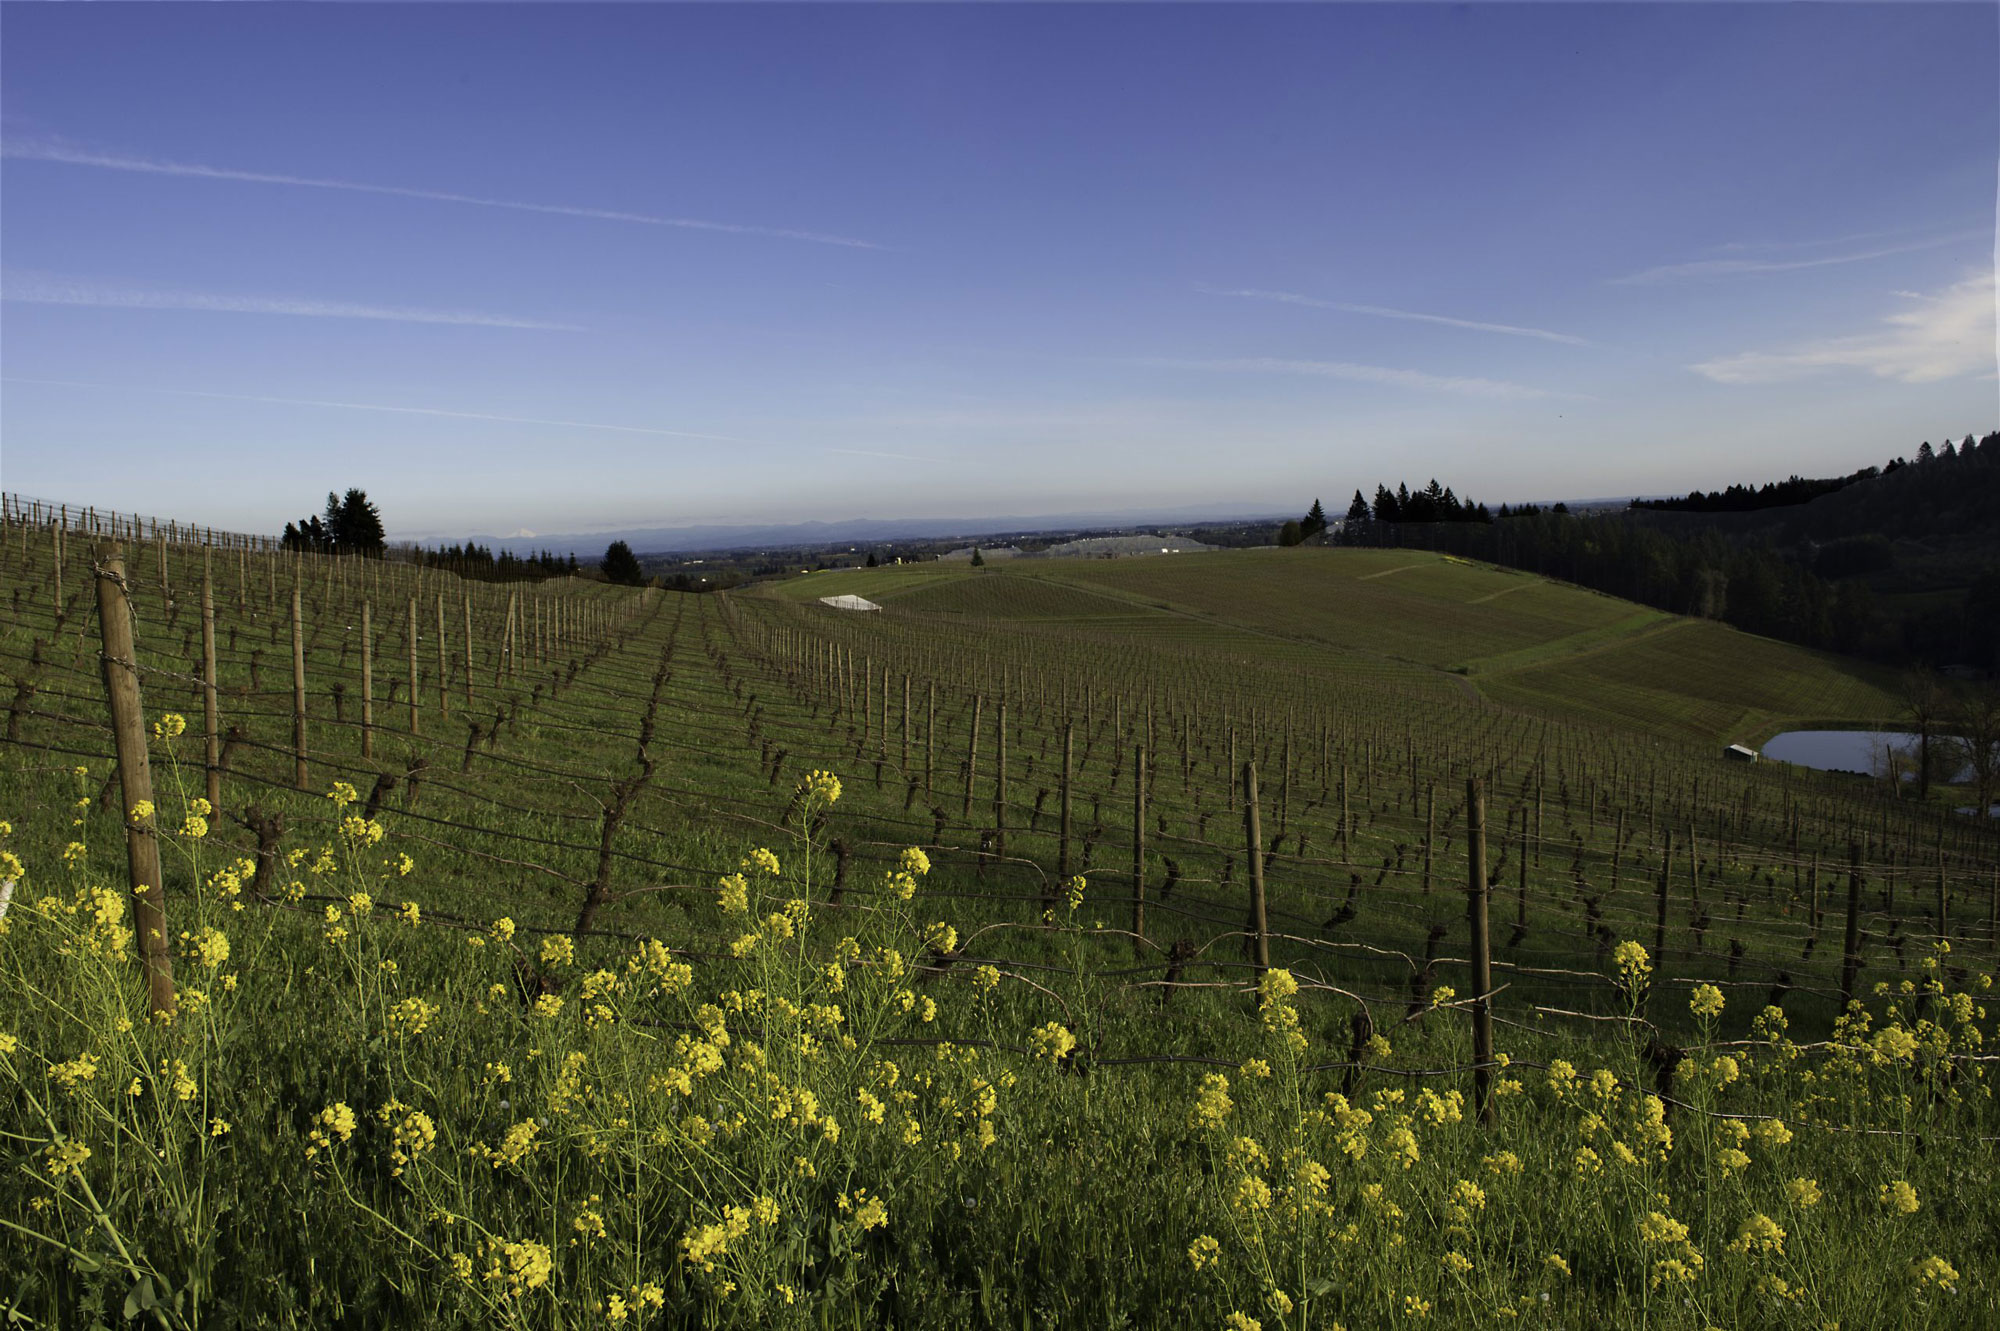 View of the Winderlea vineyards with wildflowers surrounding